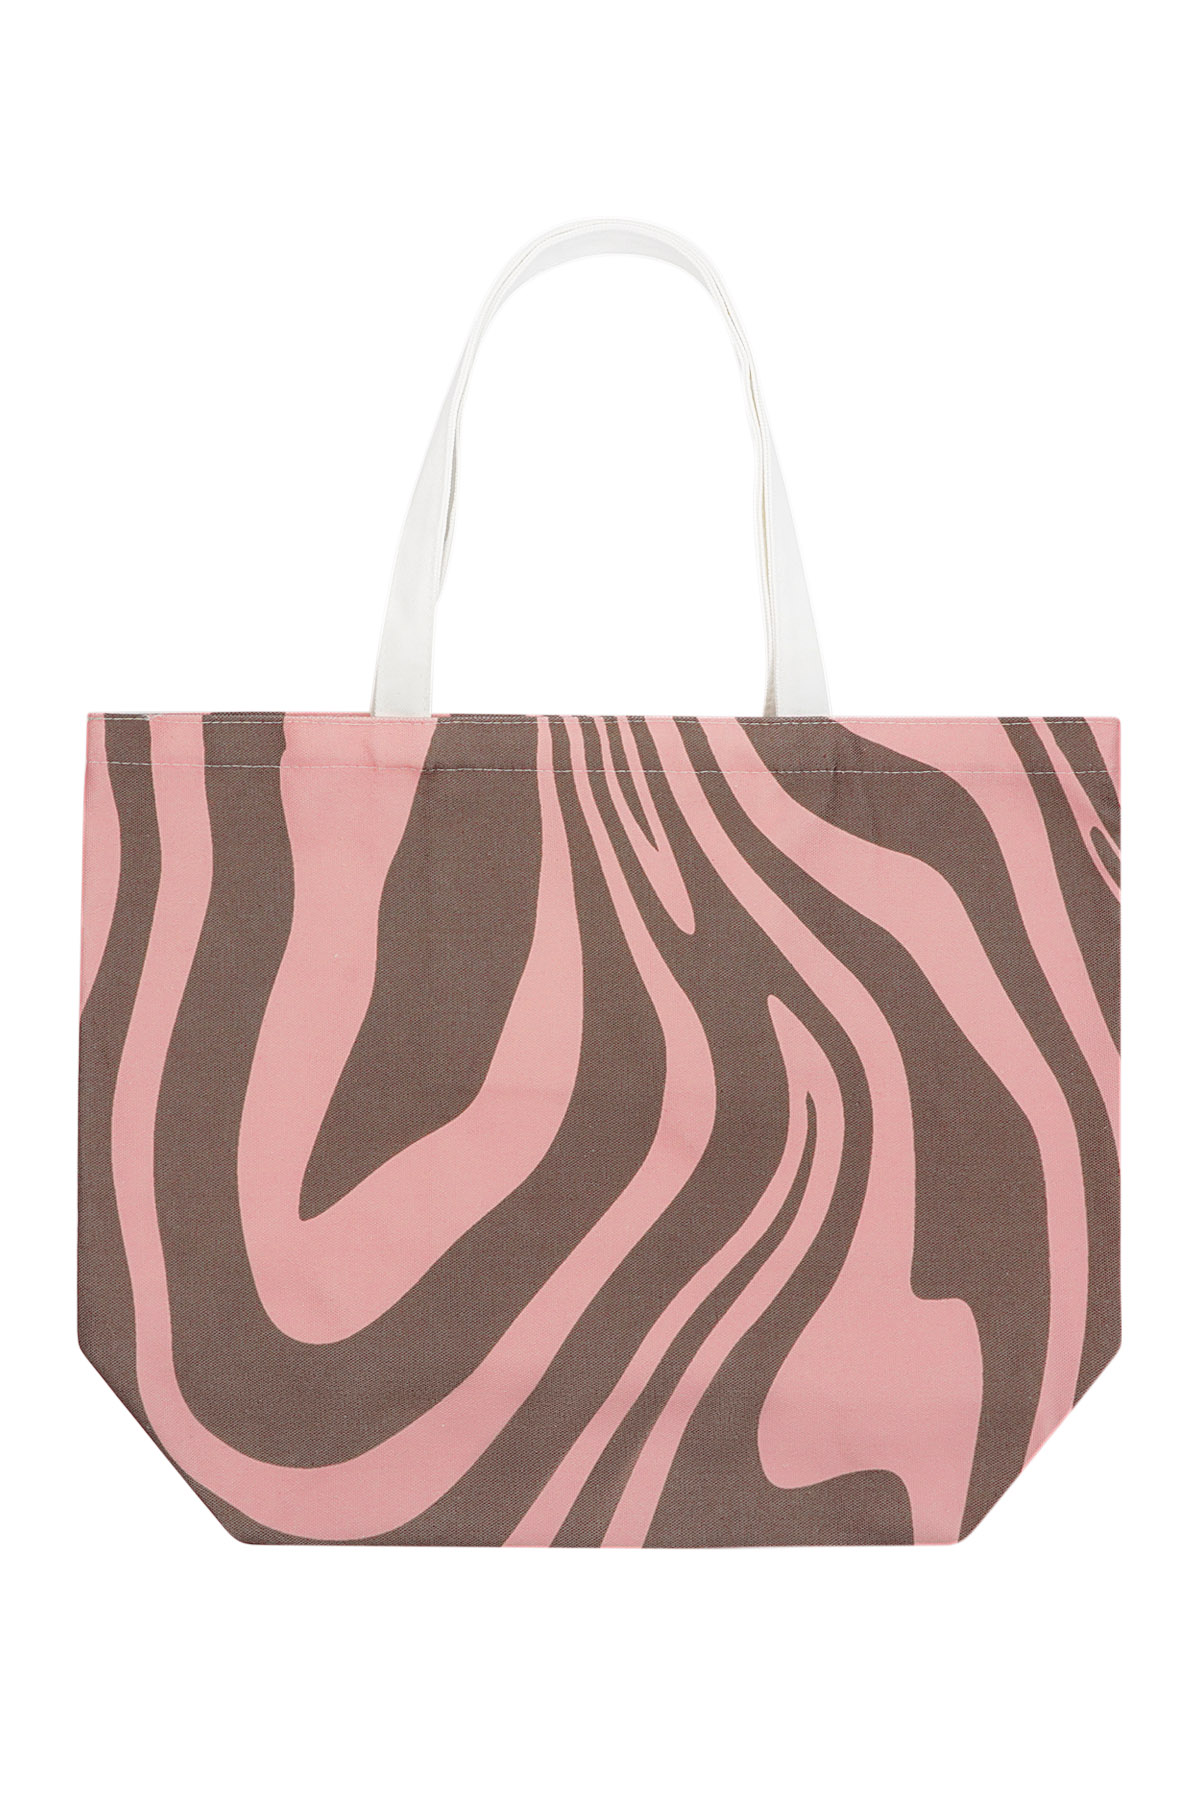 Canvas Shopper Zebraprint - braun rosa h5 